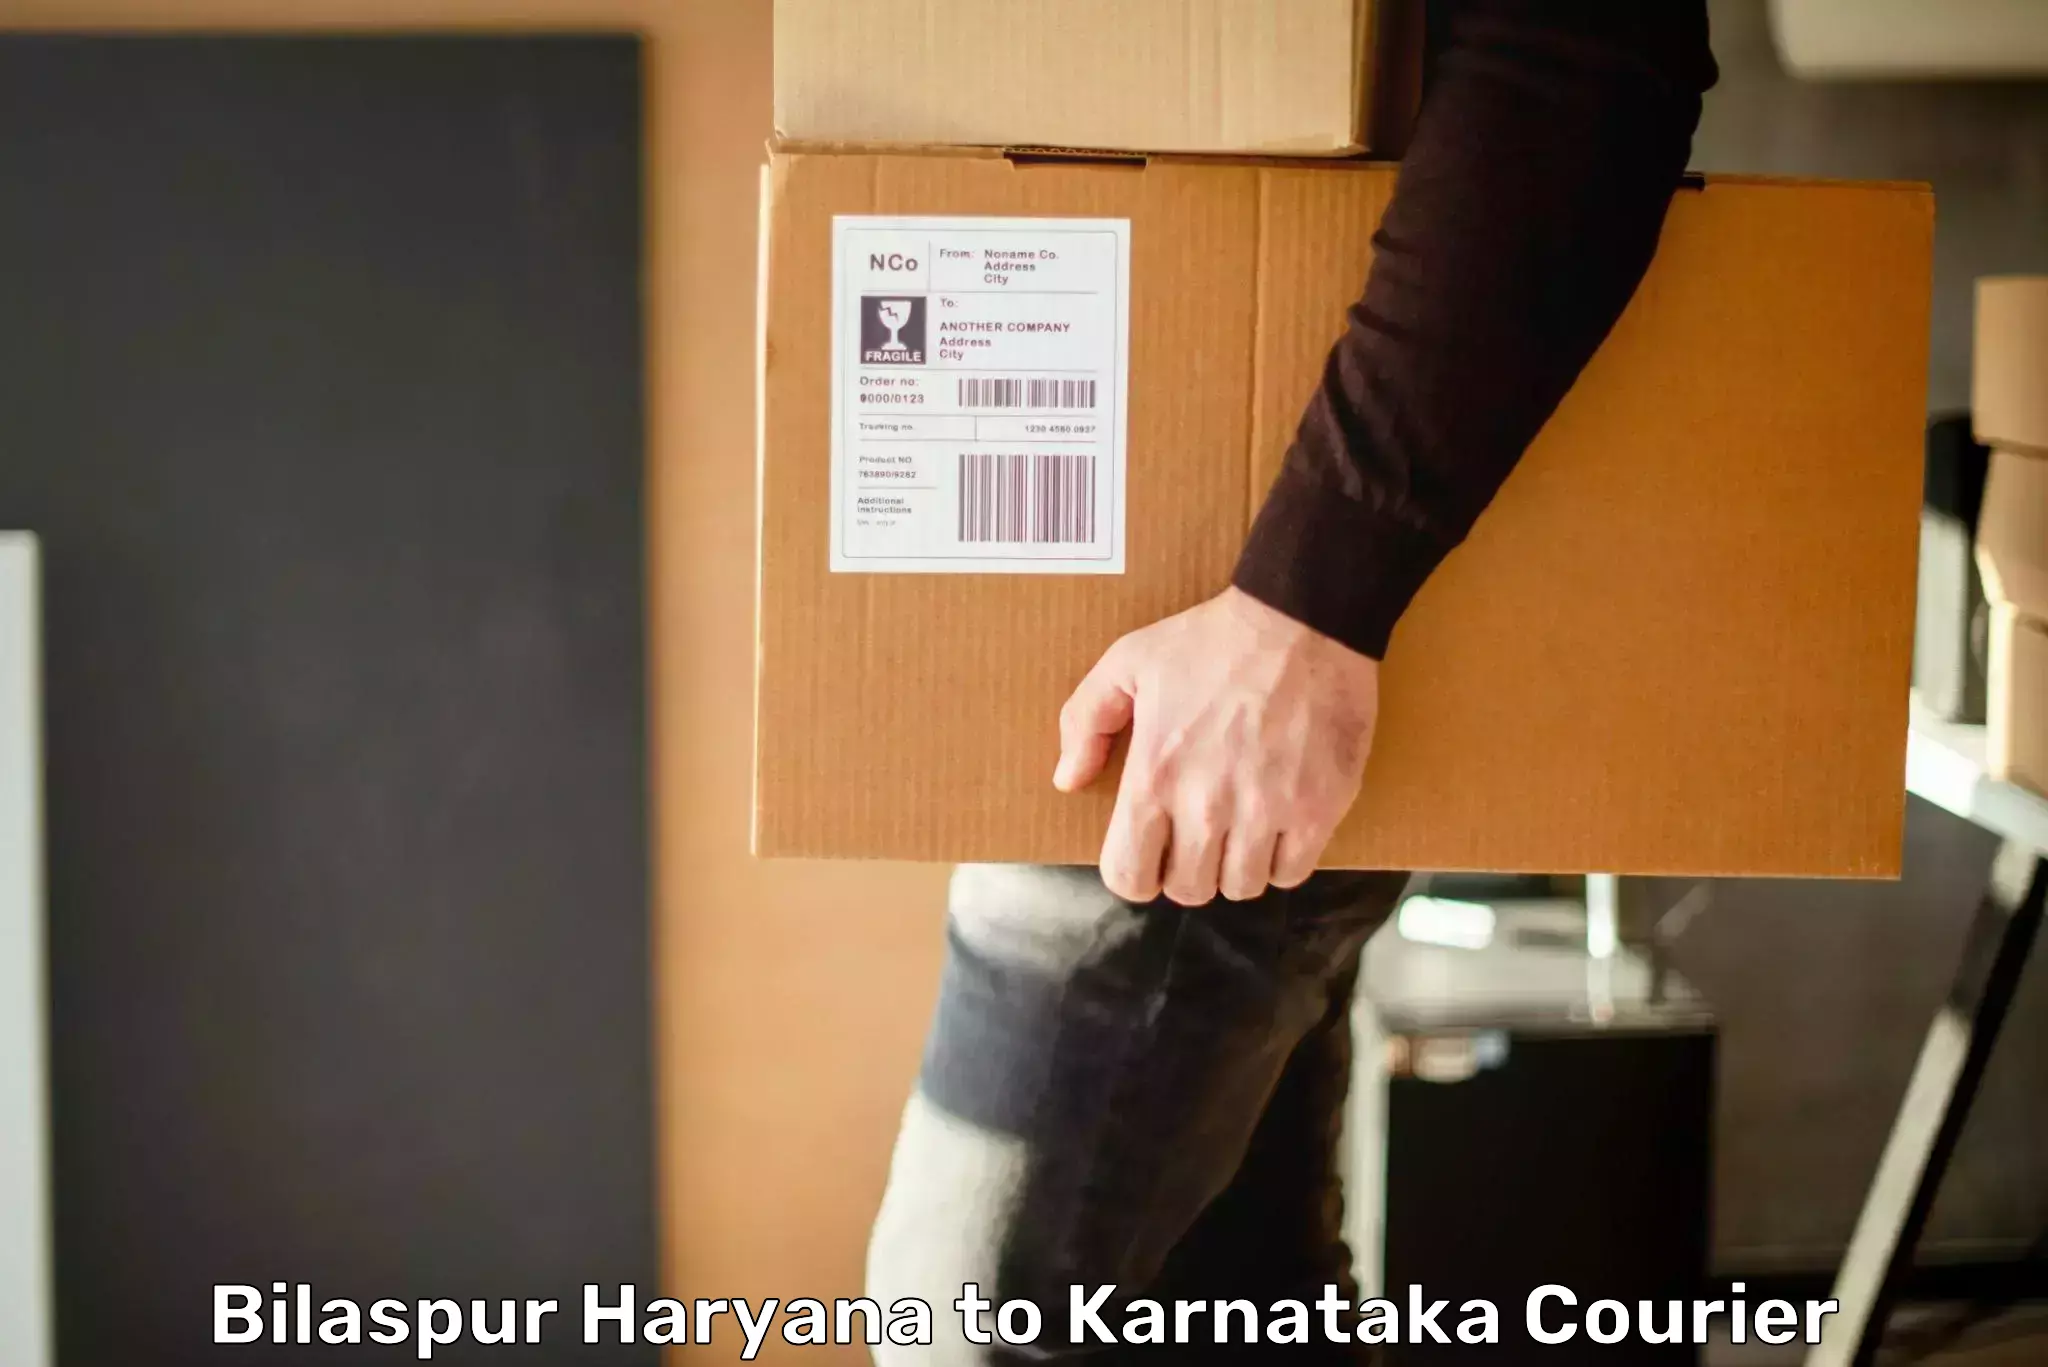 Doorstep delivery service Bilaspur Haryana to Channapatna